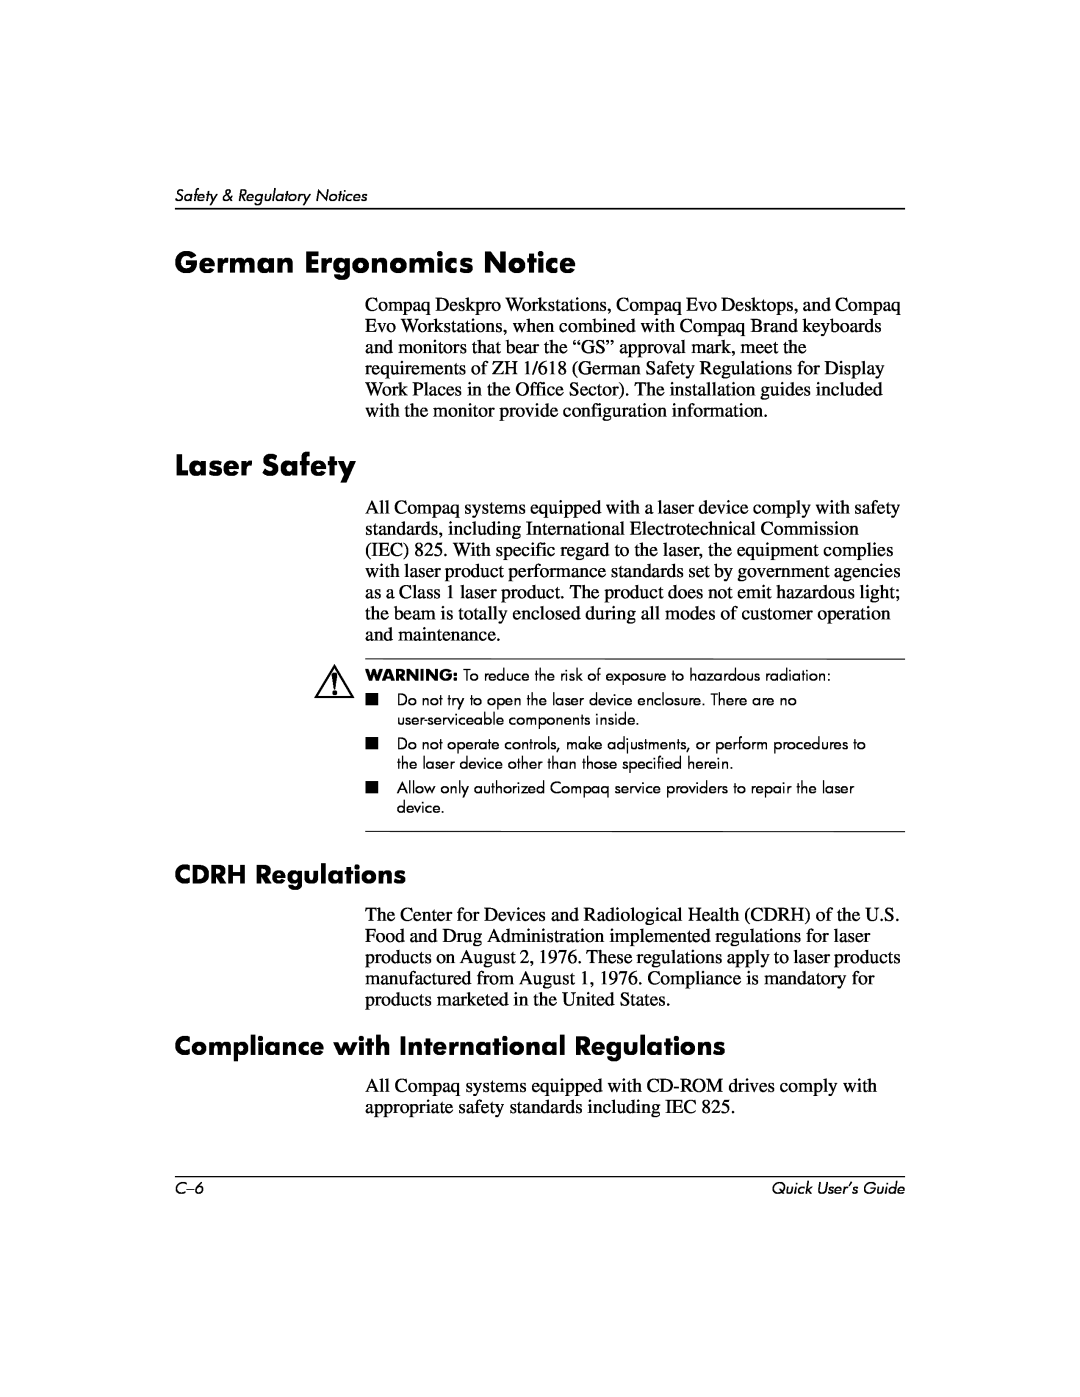 Compaq D510 e-pc manual German Ergonomics Notice, Laser Safety, CDRH Regulations, Compliance with International Regulations 